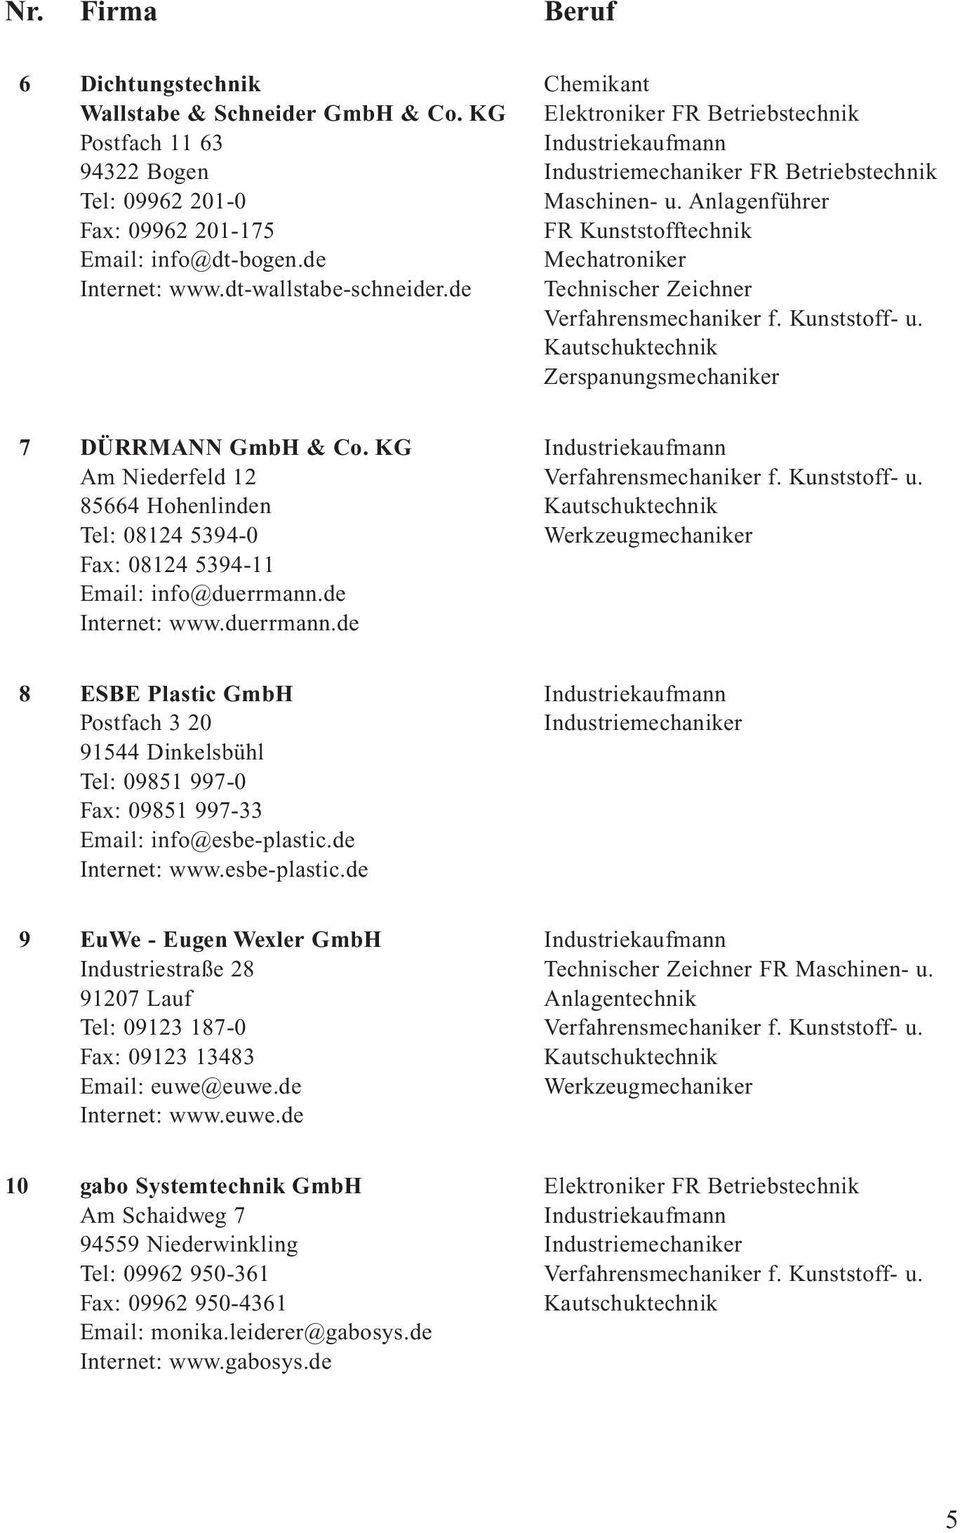 Zerspanungsmechaniker 7 DÜRRMANN GmbH & Co. KG Am Niederfeld 12 Verfahrensmechaniker f. Kunststoff- u. 85664 Hohenlinden Tel: 08124 5394-0 Fax: 08124 5394-11 Email: info@duerrmann.de Internet: www.